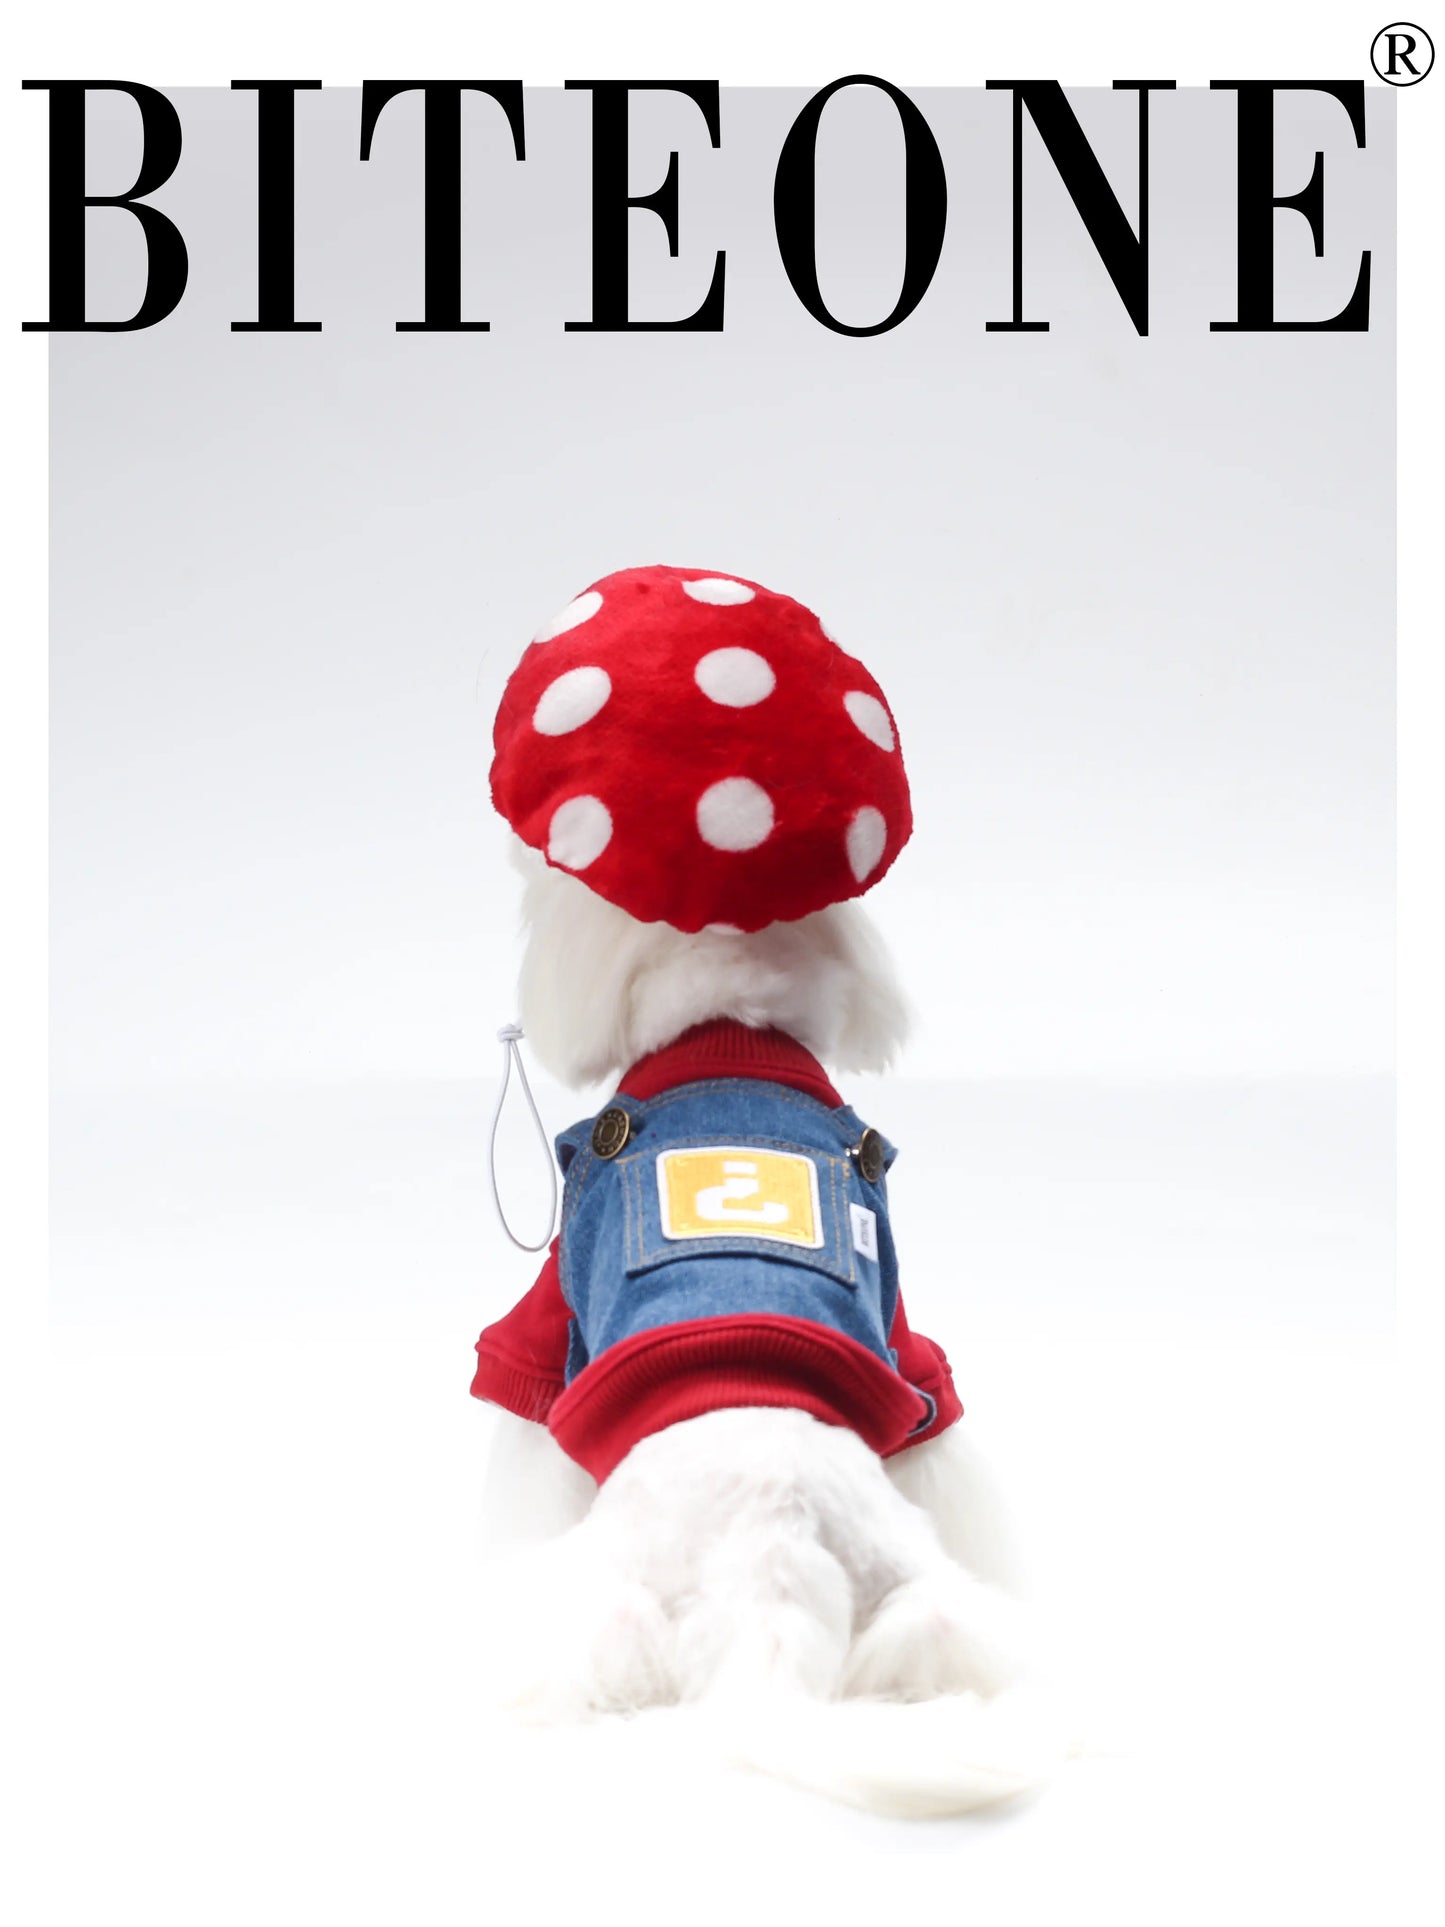 BITEONE: Gaming Fun - 320g Cotton Hoodie, Denim Overall, Mushroom Hat for Pets